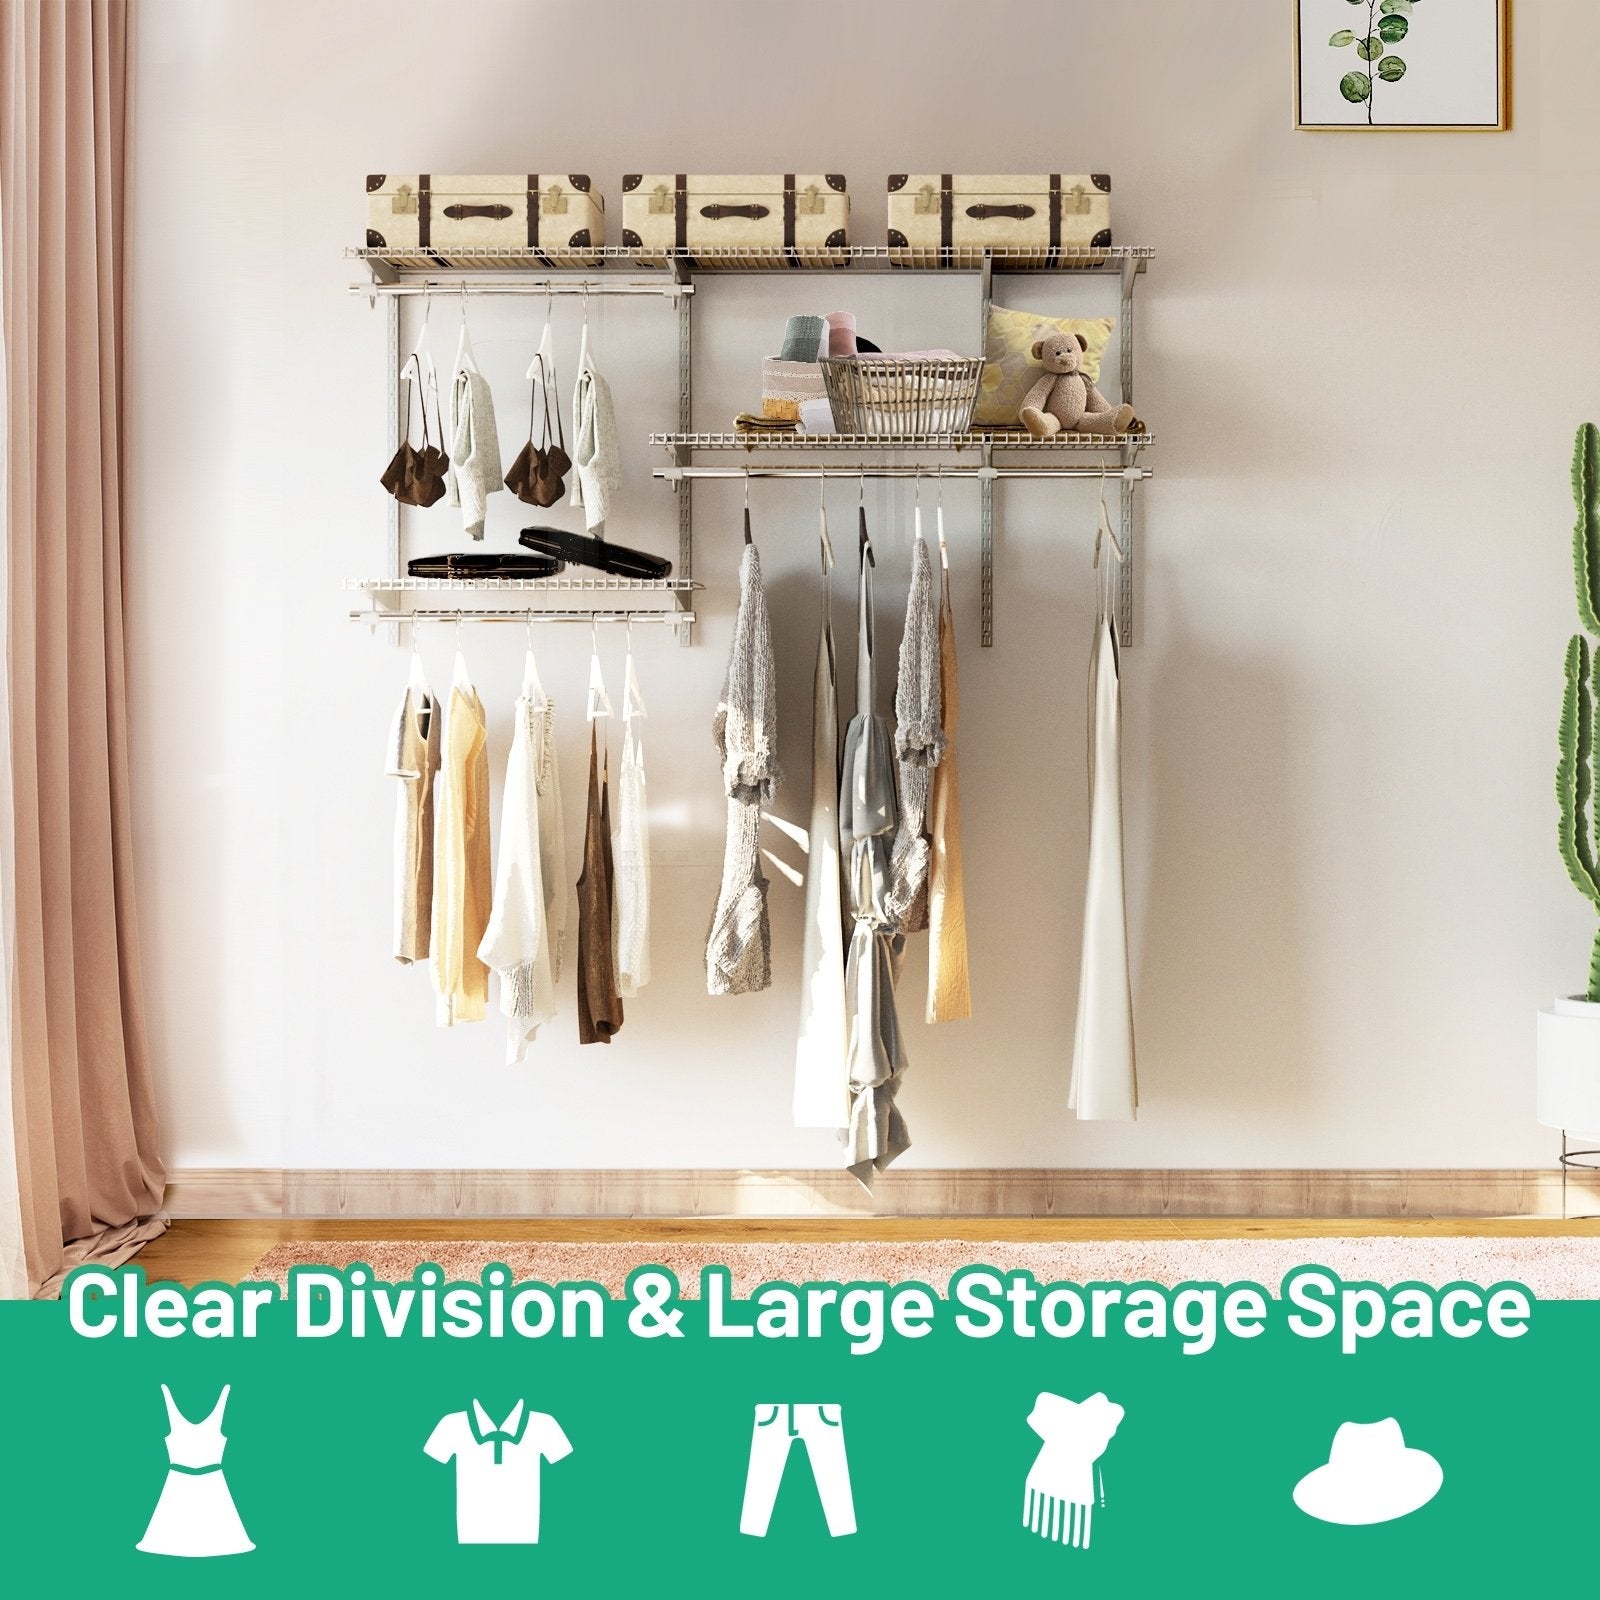 Custom Closet Organizer Kit 3 to 5 Feet Wall-Mounted Closet System with Hang Rod, Gray Clothing & Closet Storage   at Gallery Canada